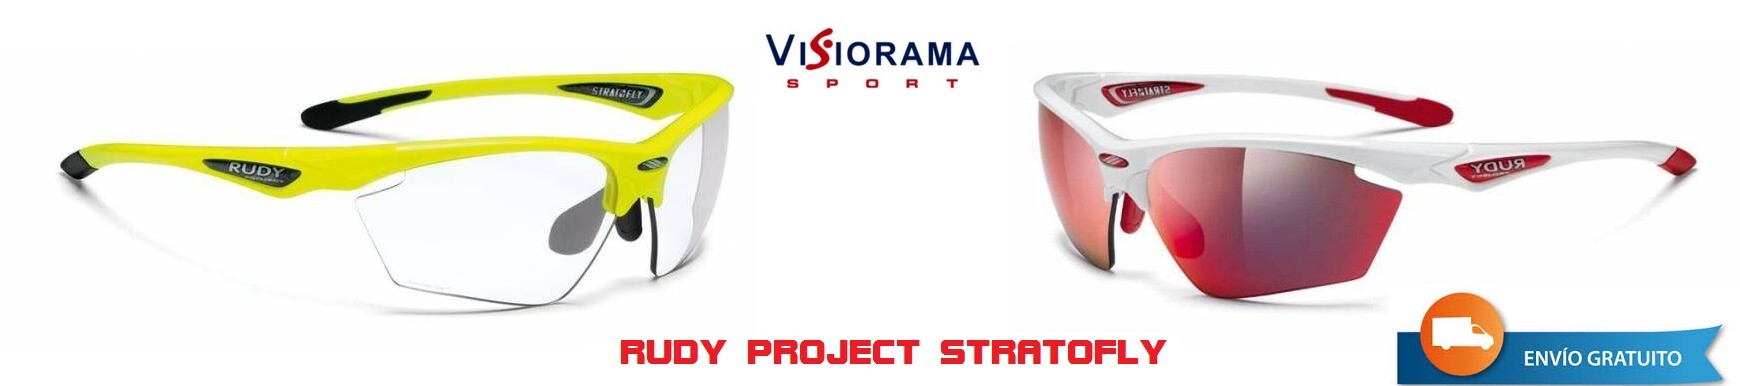 Promozione Rudy Project a VisioramaSport